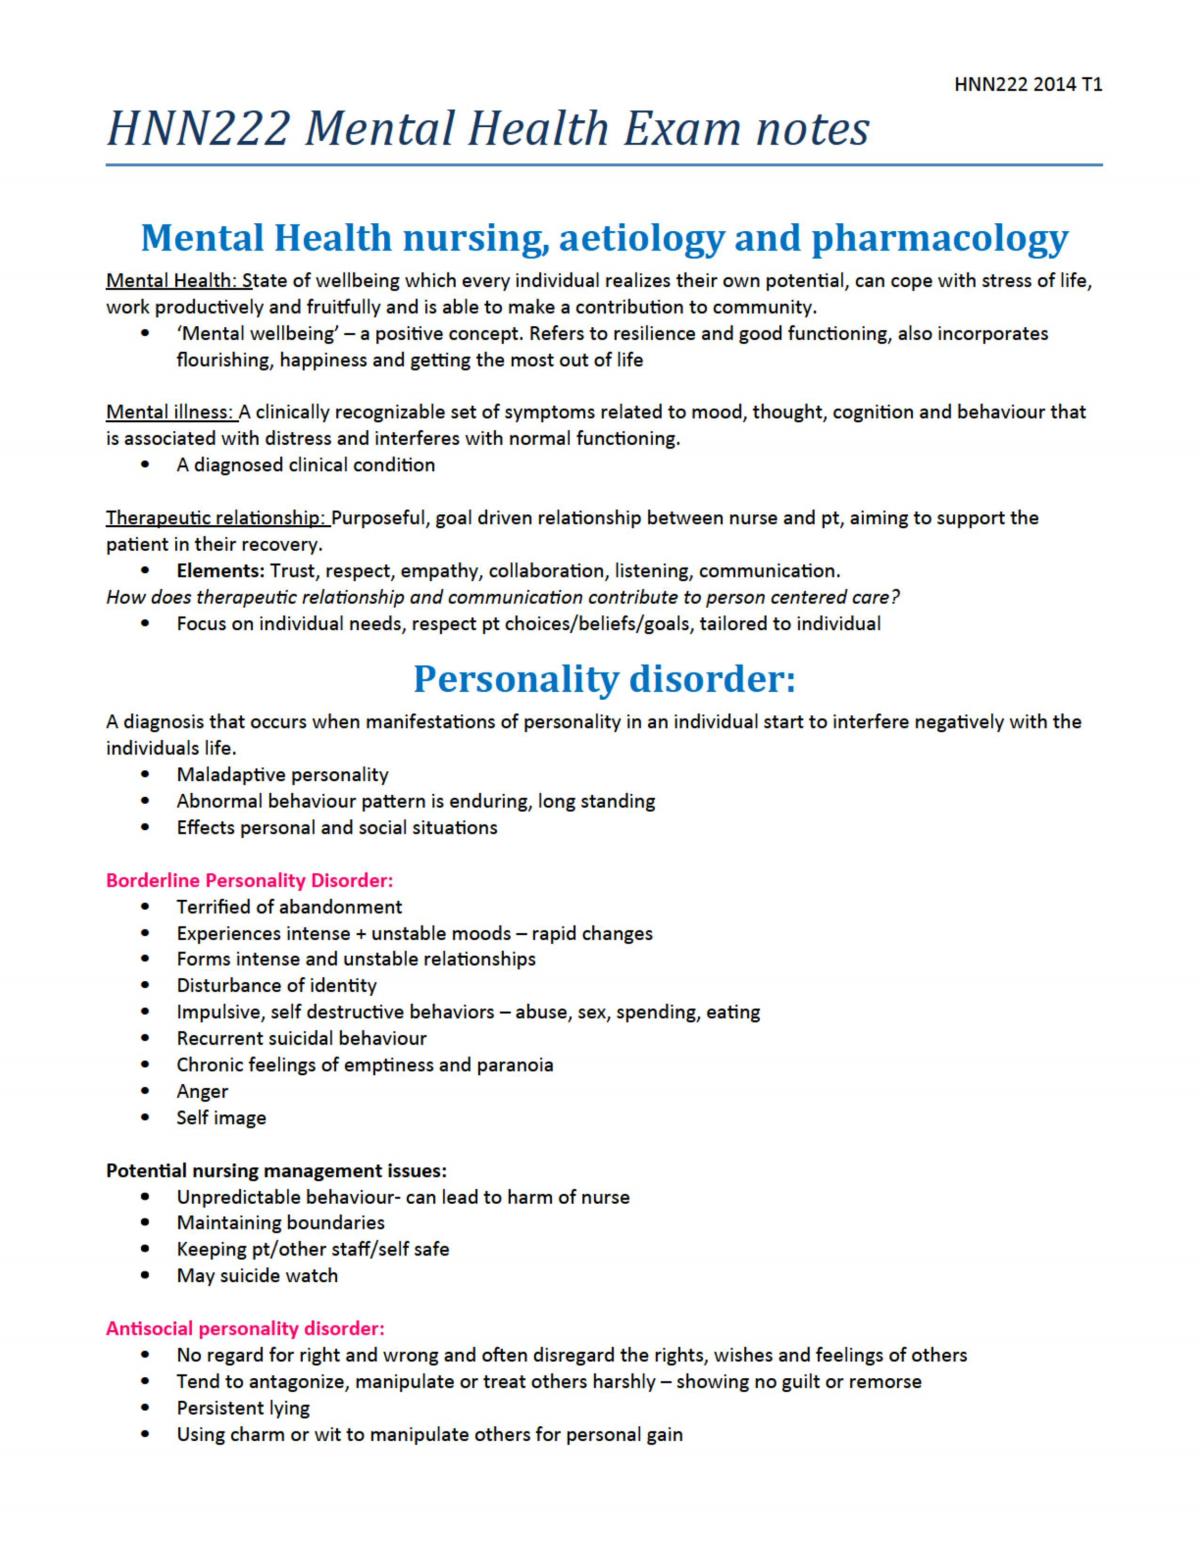 research topics mental health nursing